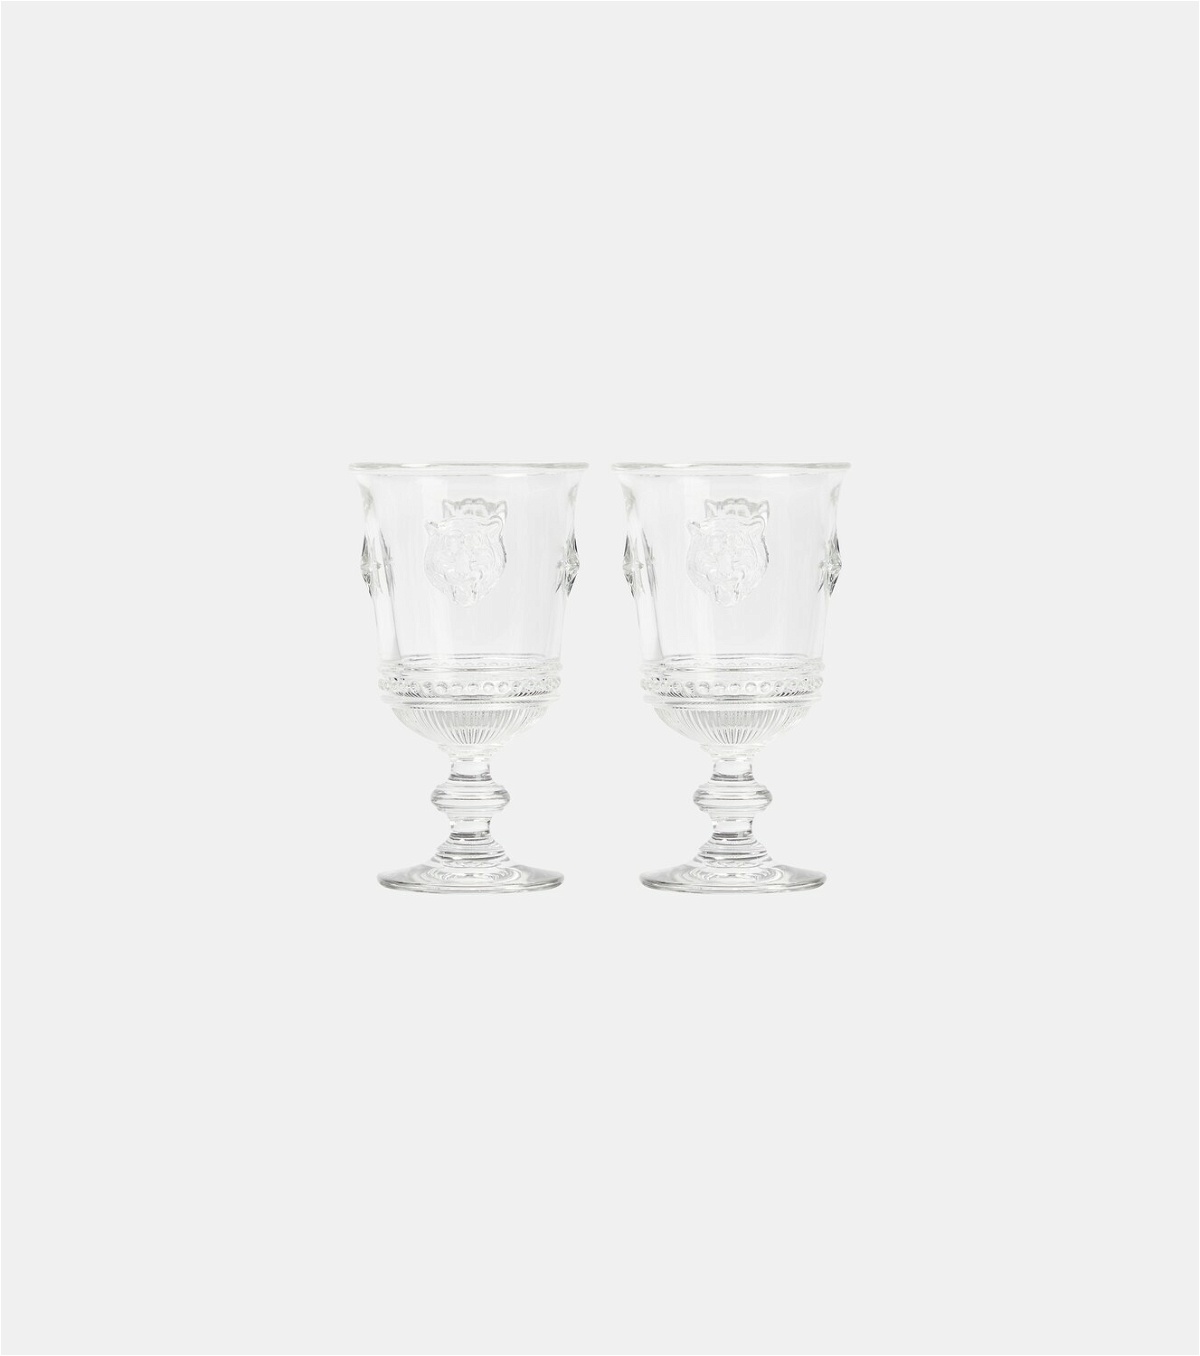 Gucci Tiger Head set of 2 wine glasses